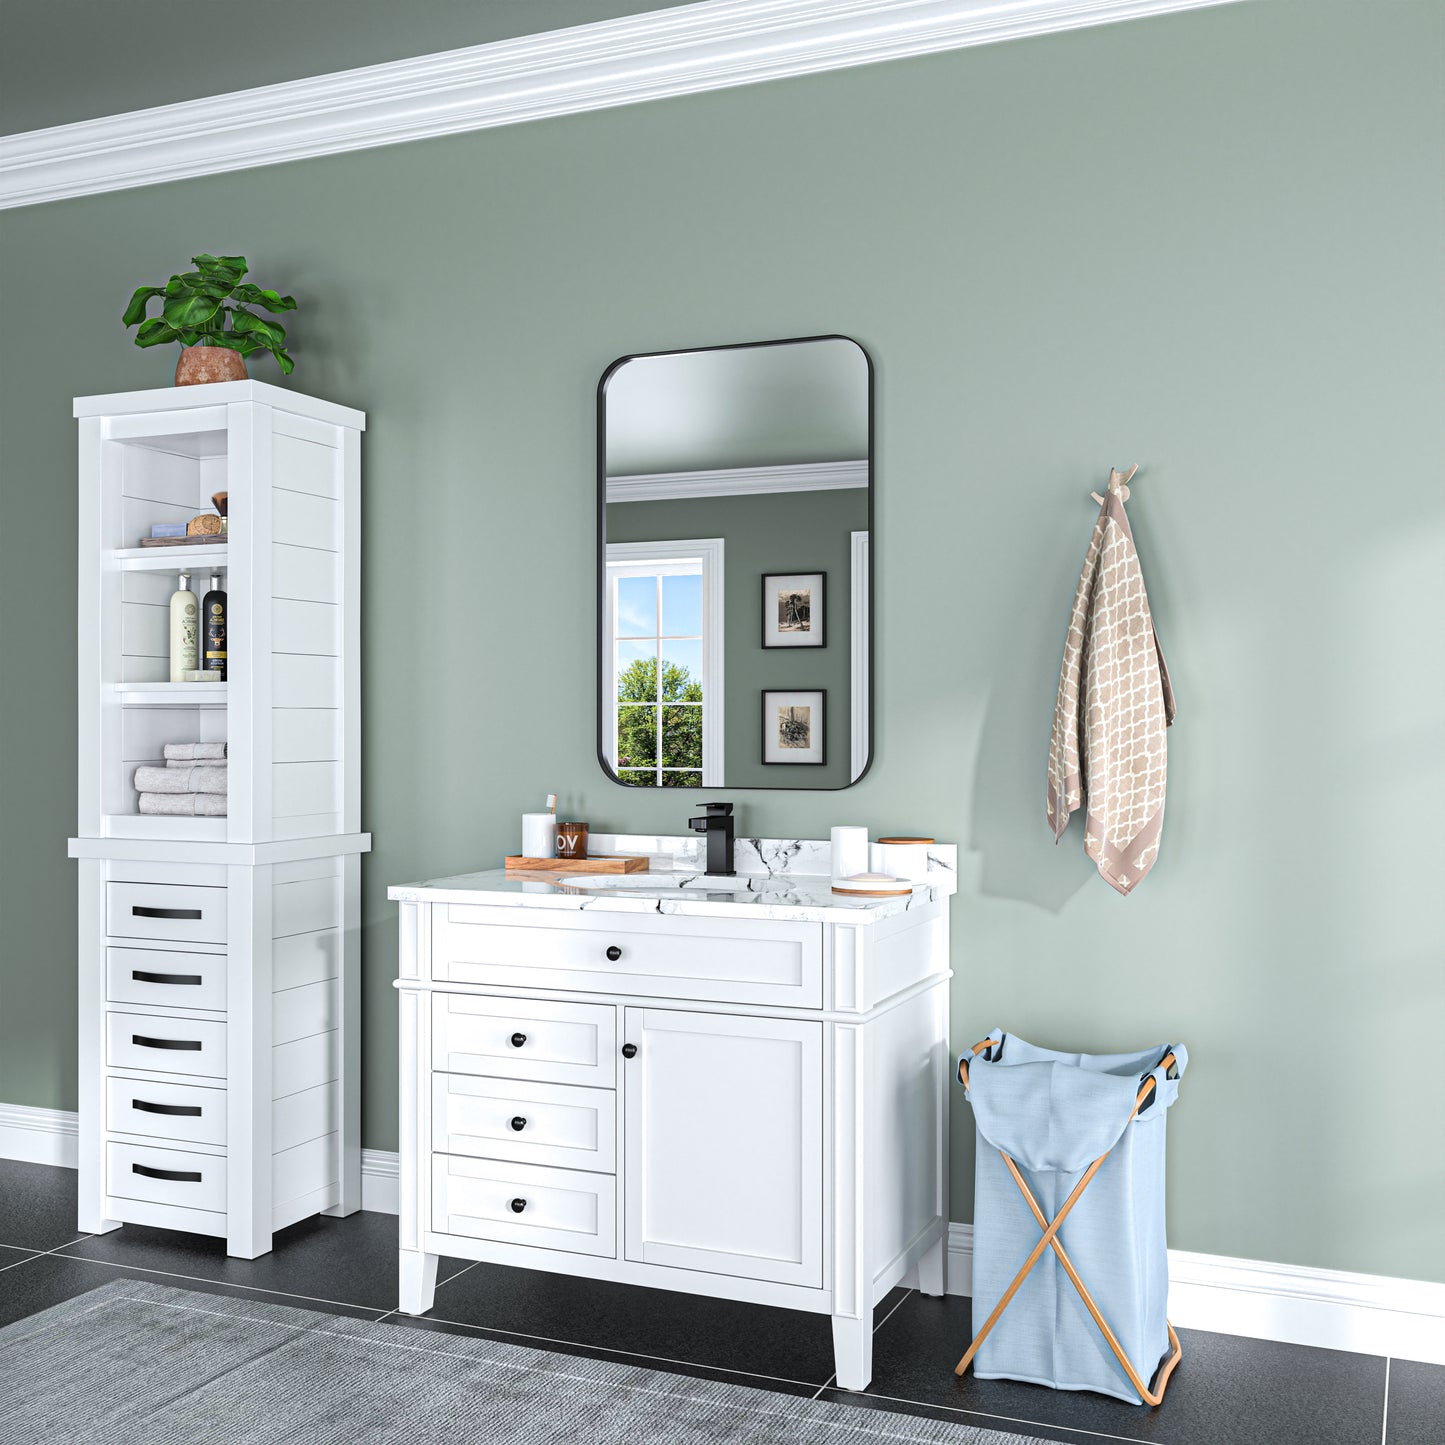 Waterpar® 36 in. W x 24 in. H Rectangular Aluminum Framed Wall Bathroom Vanity Mirror